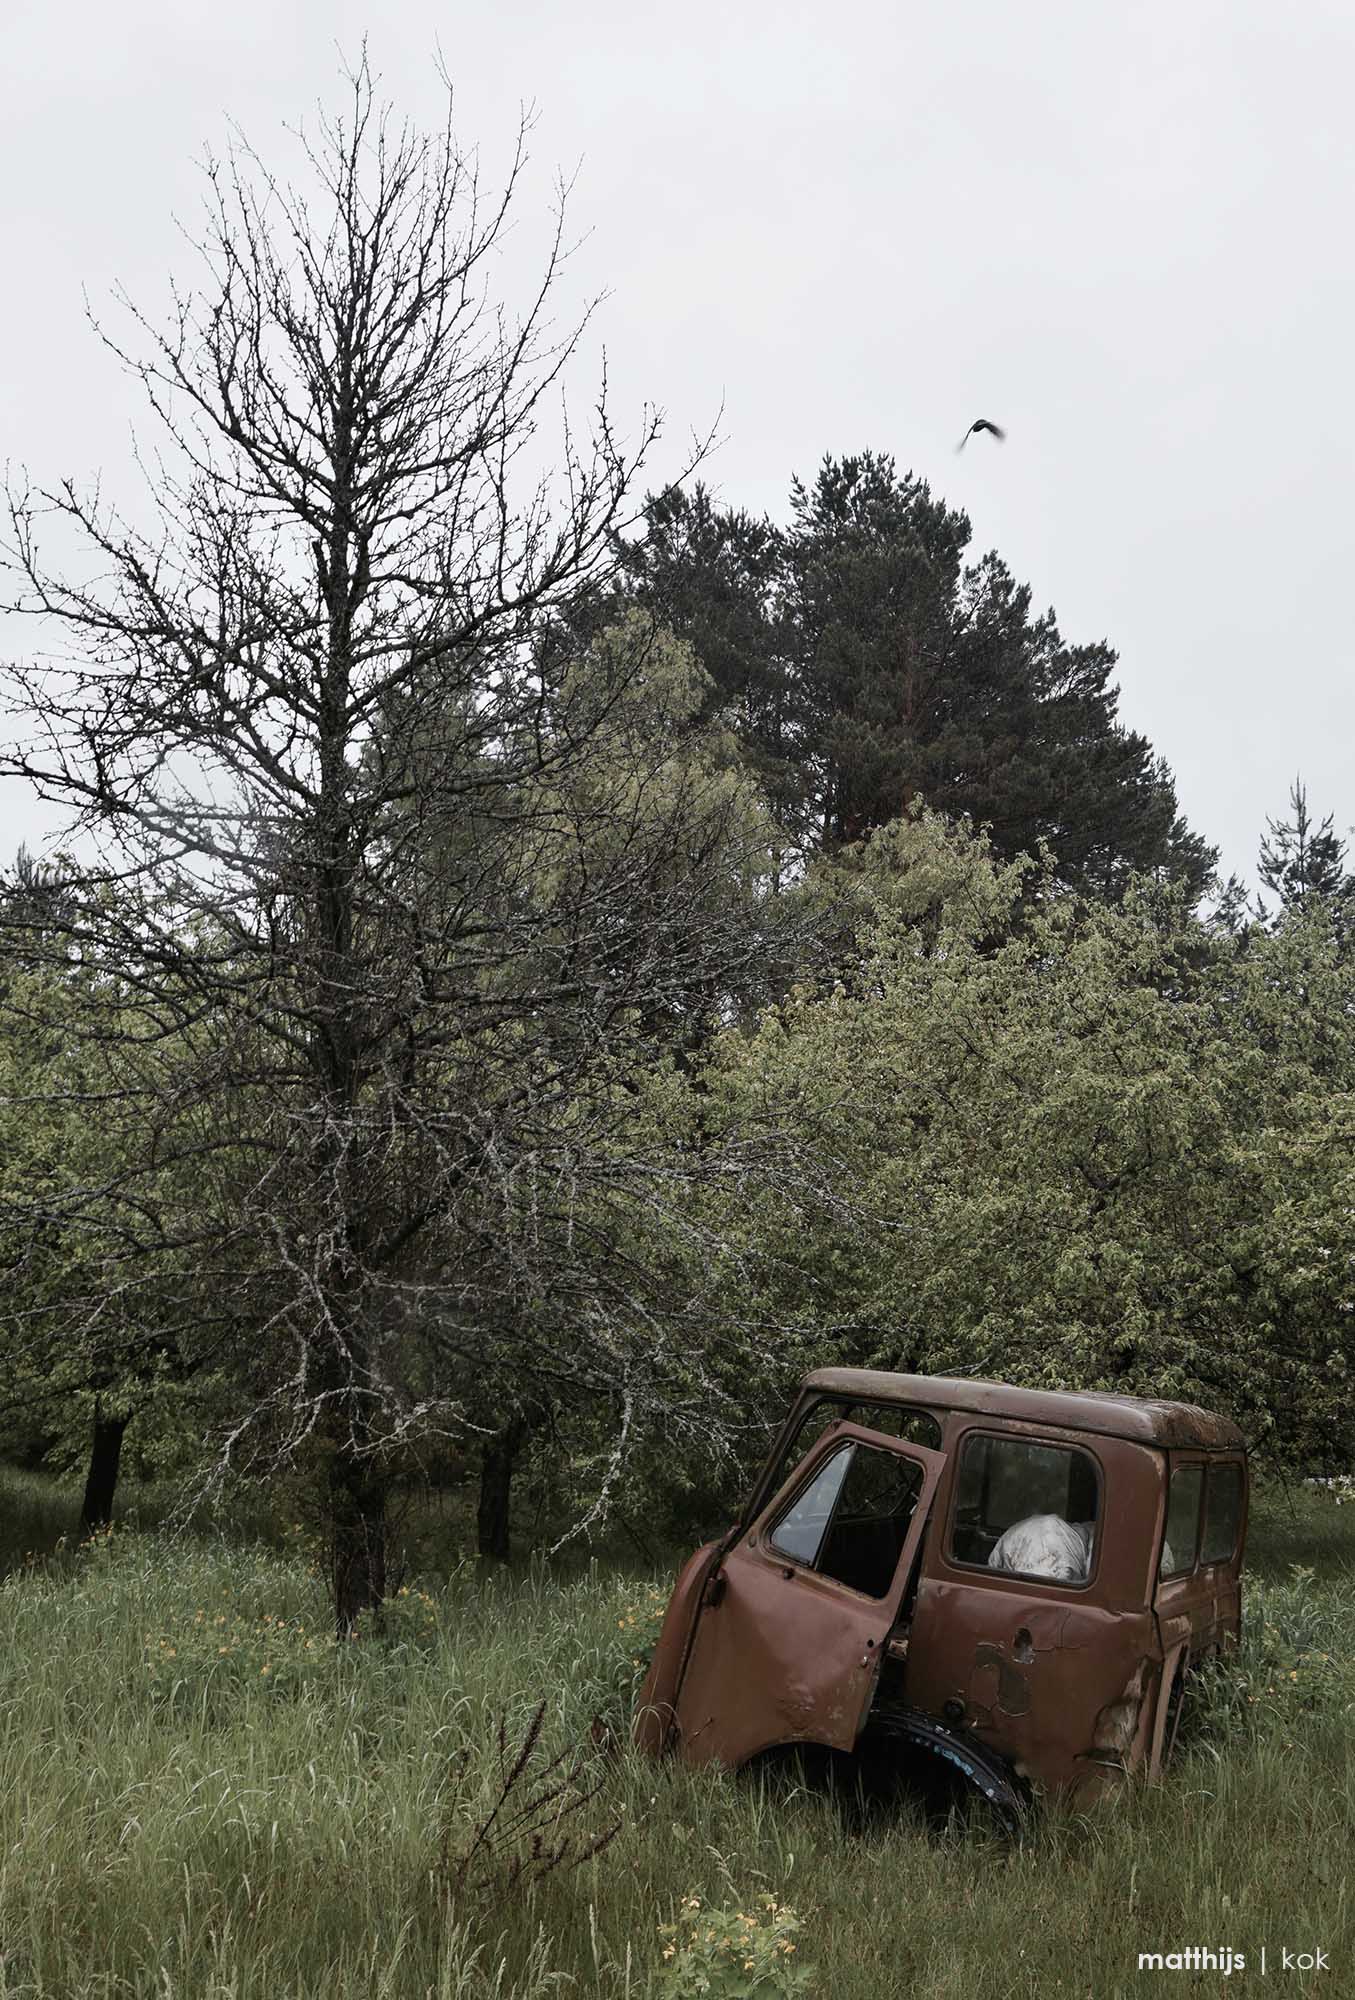 Abandoned car at the DUGA, Ukraine | Photo by Matthijs Kok